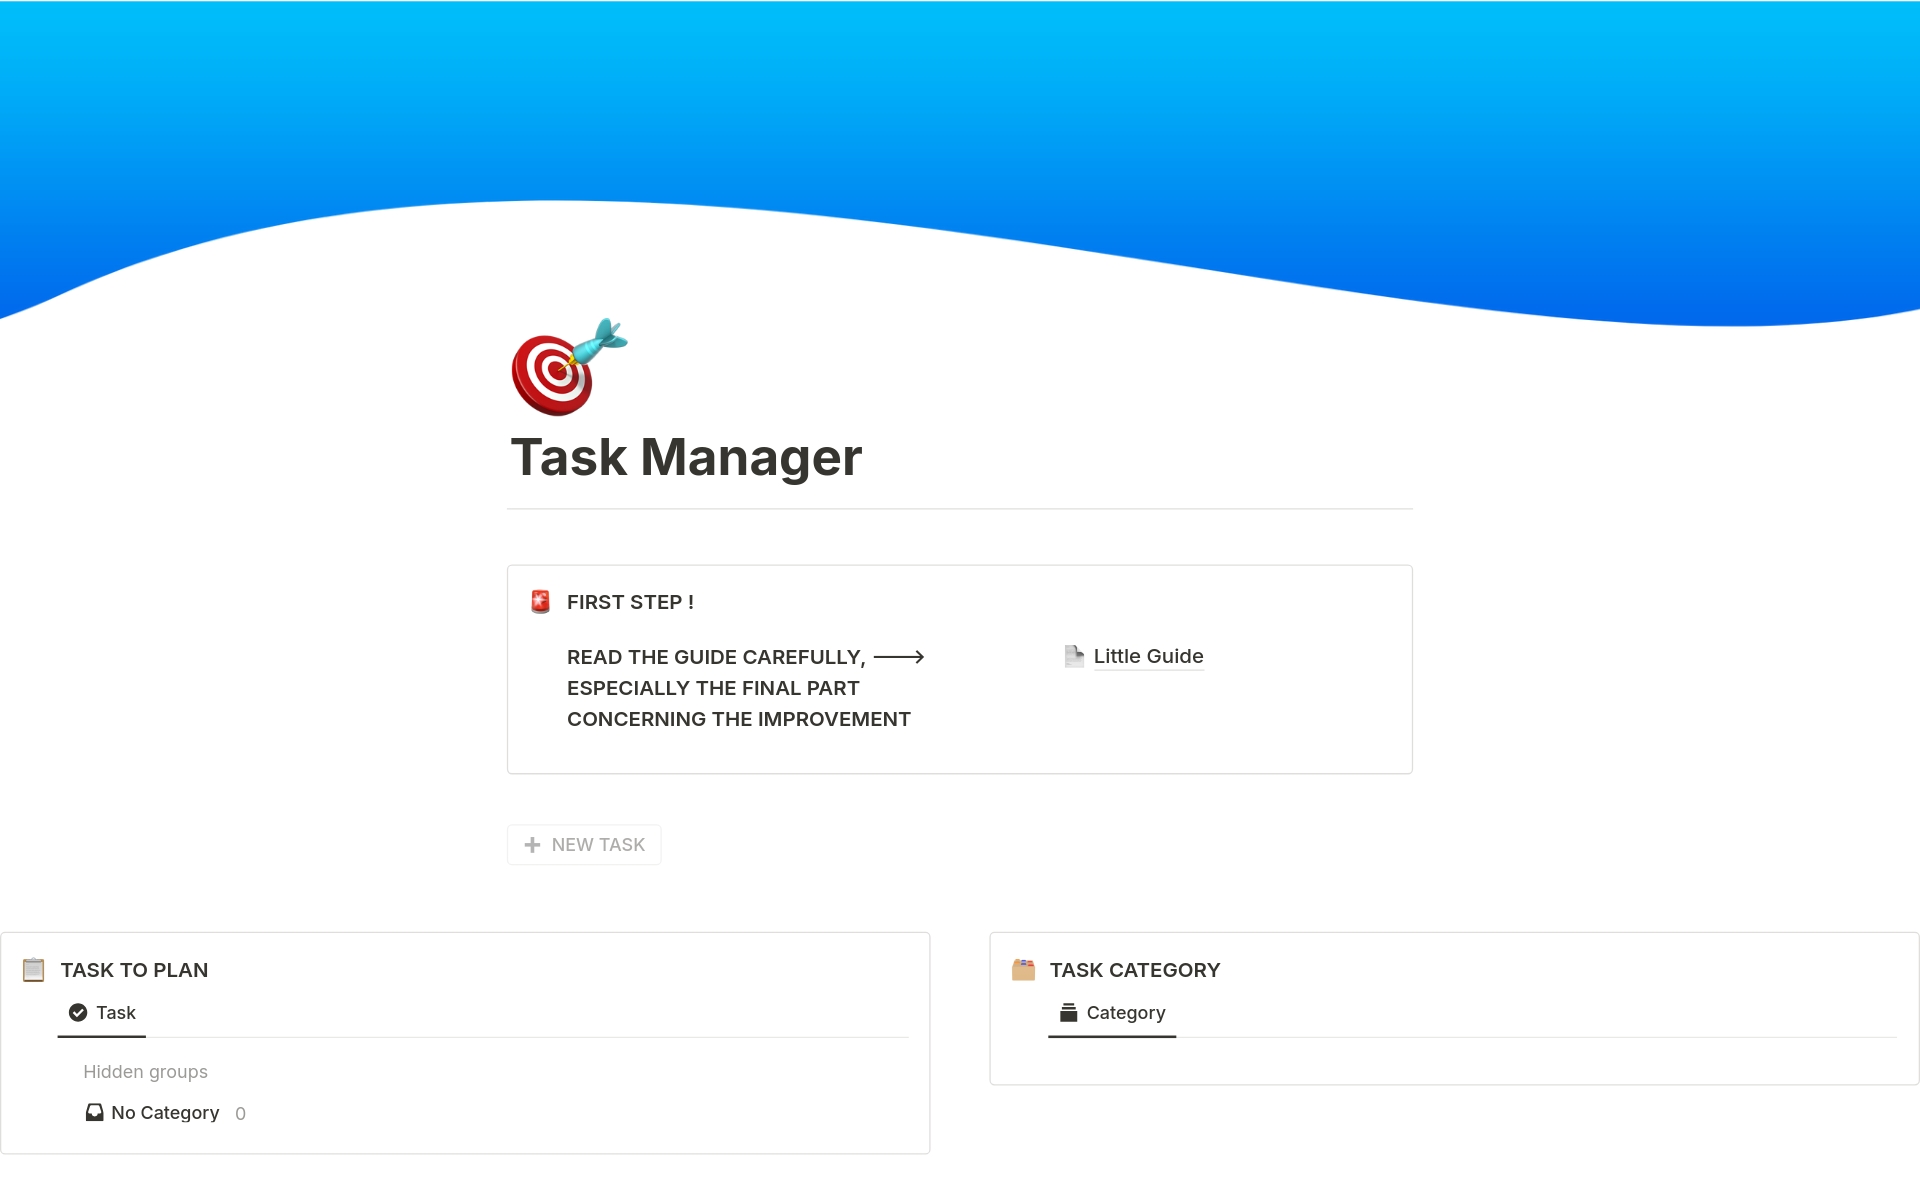 Vista previa de una plantilla para Complete Task Manager